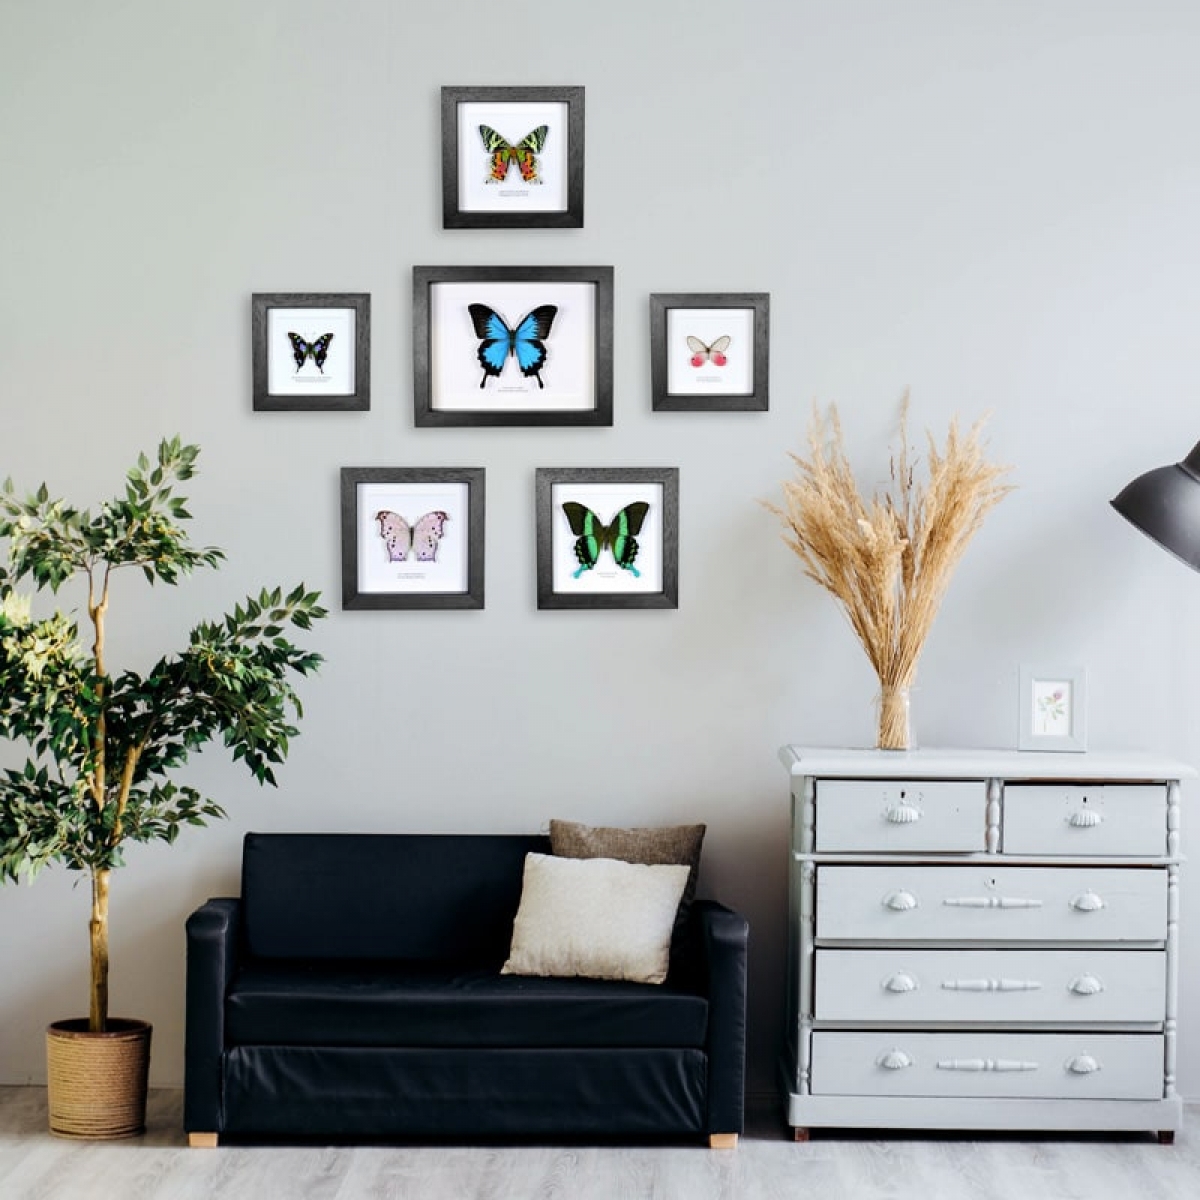 Minibeast Minibeast Best Sellers Entomology Wall Display - "Lounge"